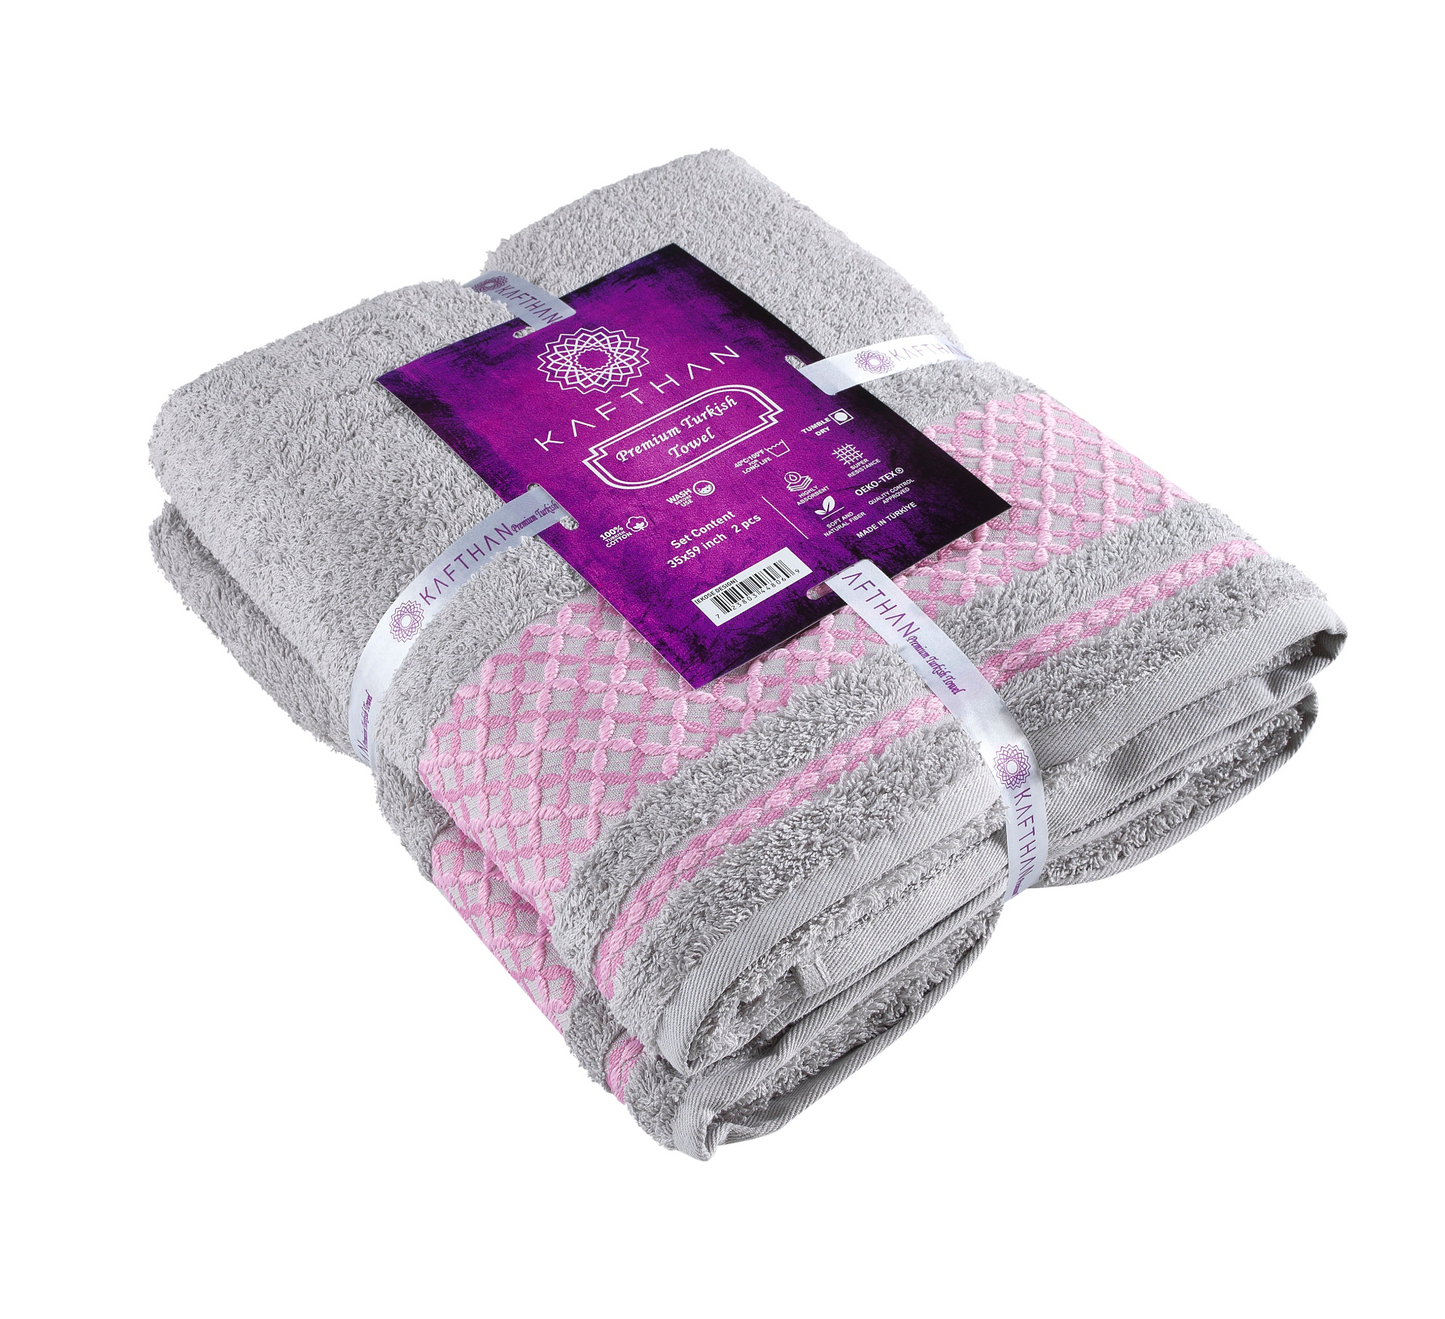 Plaid Bath Towel - Set of 2